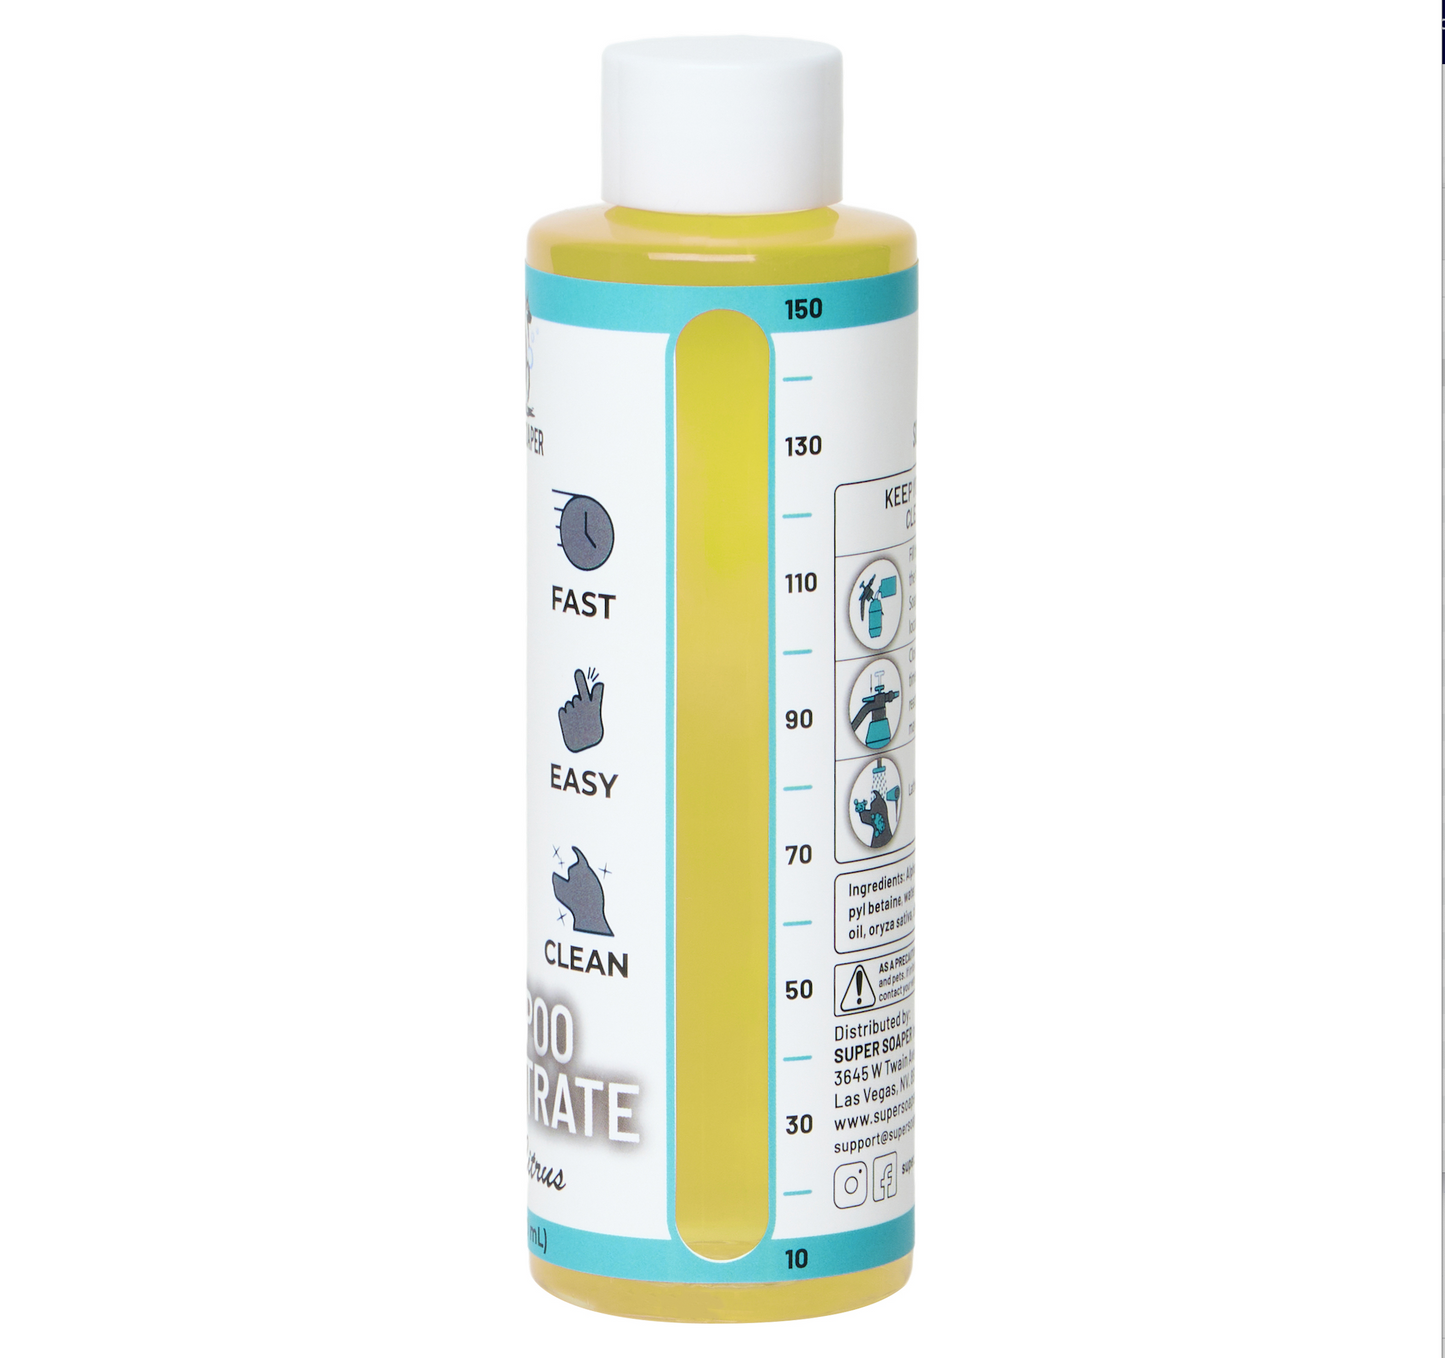 Super Soaper Dog Shampoo & Sprayer Bundle (150ml)